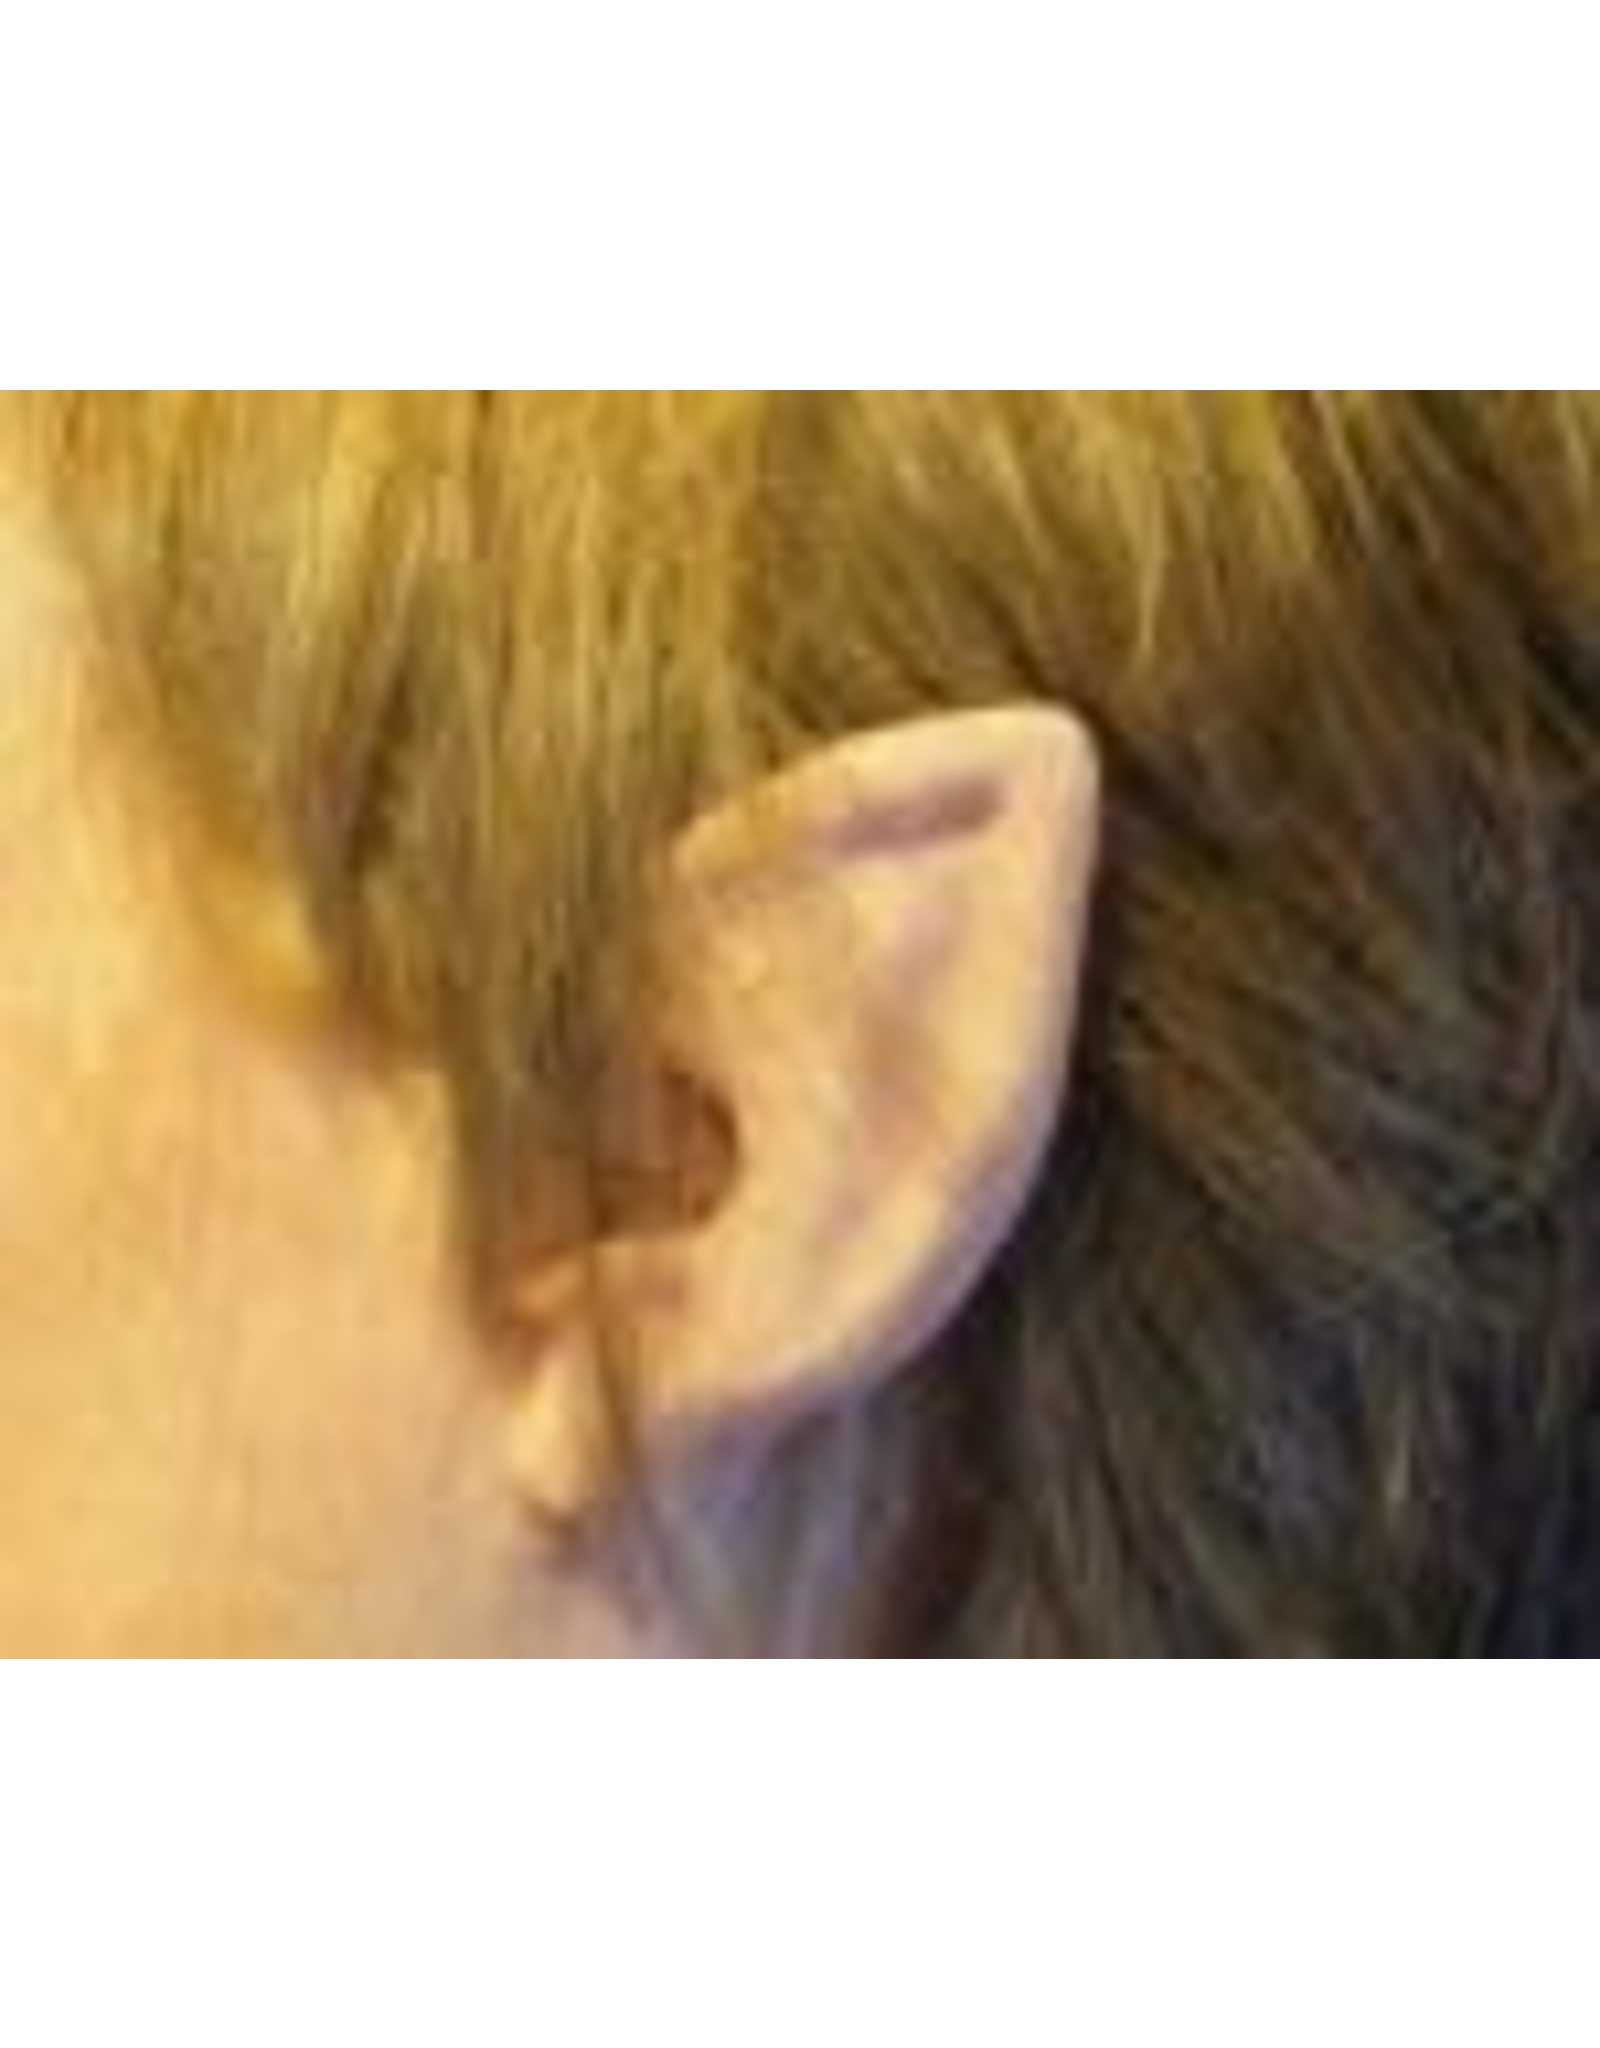 HM Smallwares Elf Flexi-Ears